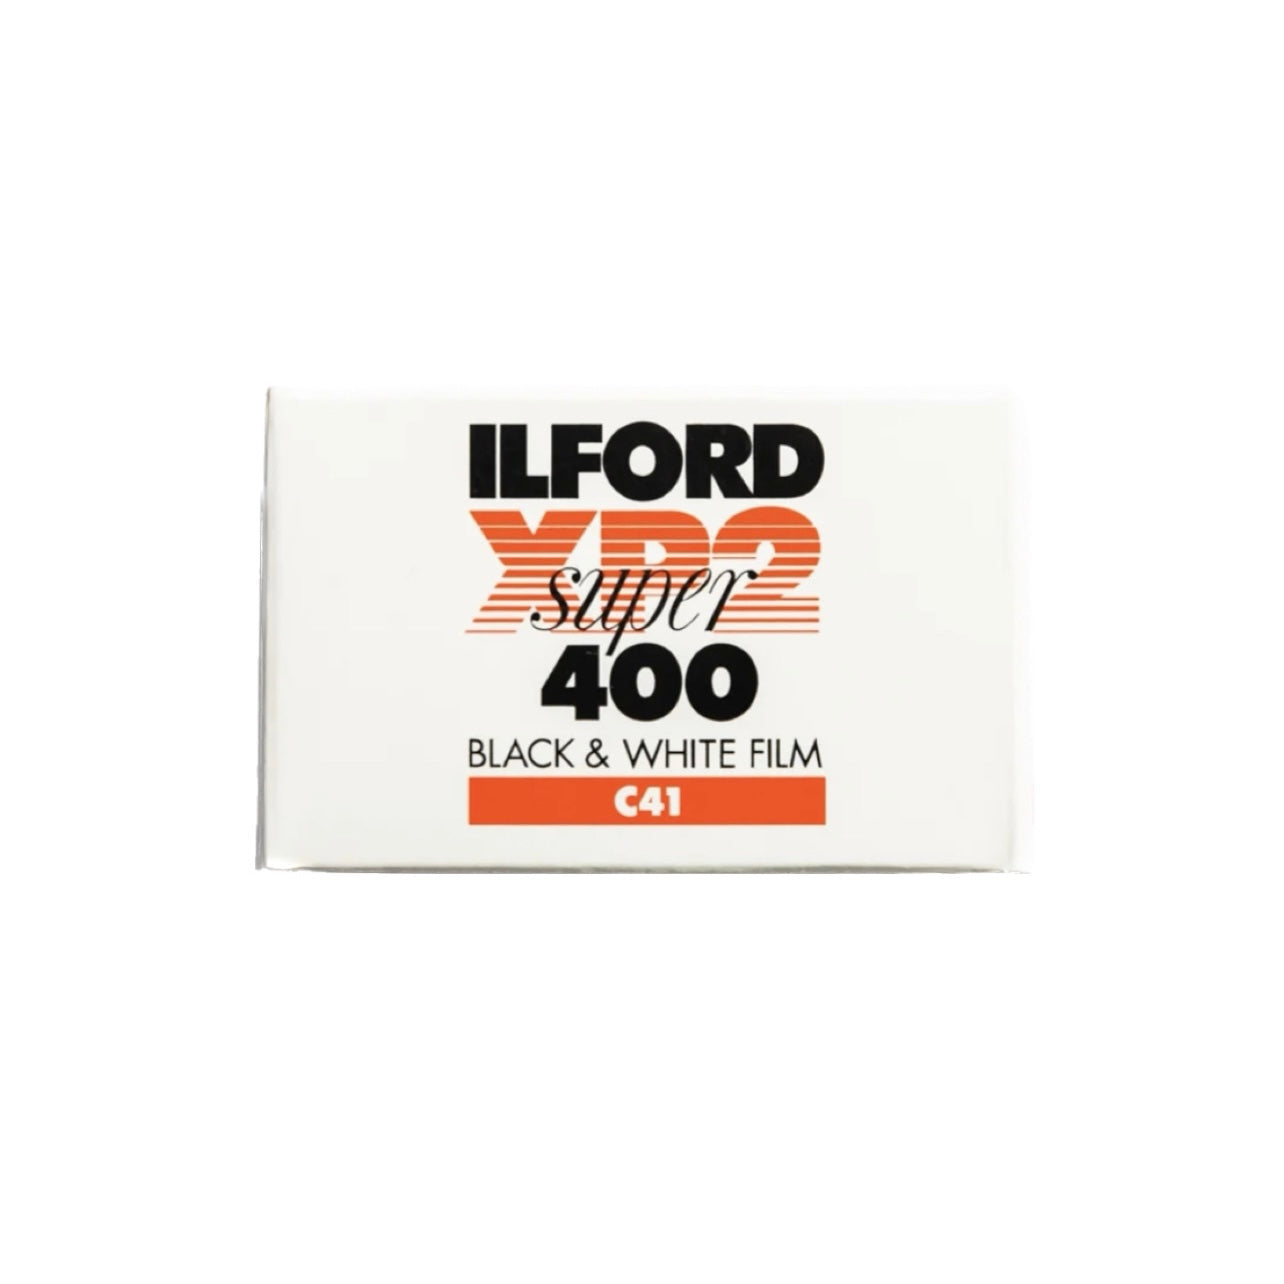 Ilford XP2 Super 400 [Expired 2009]